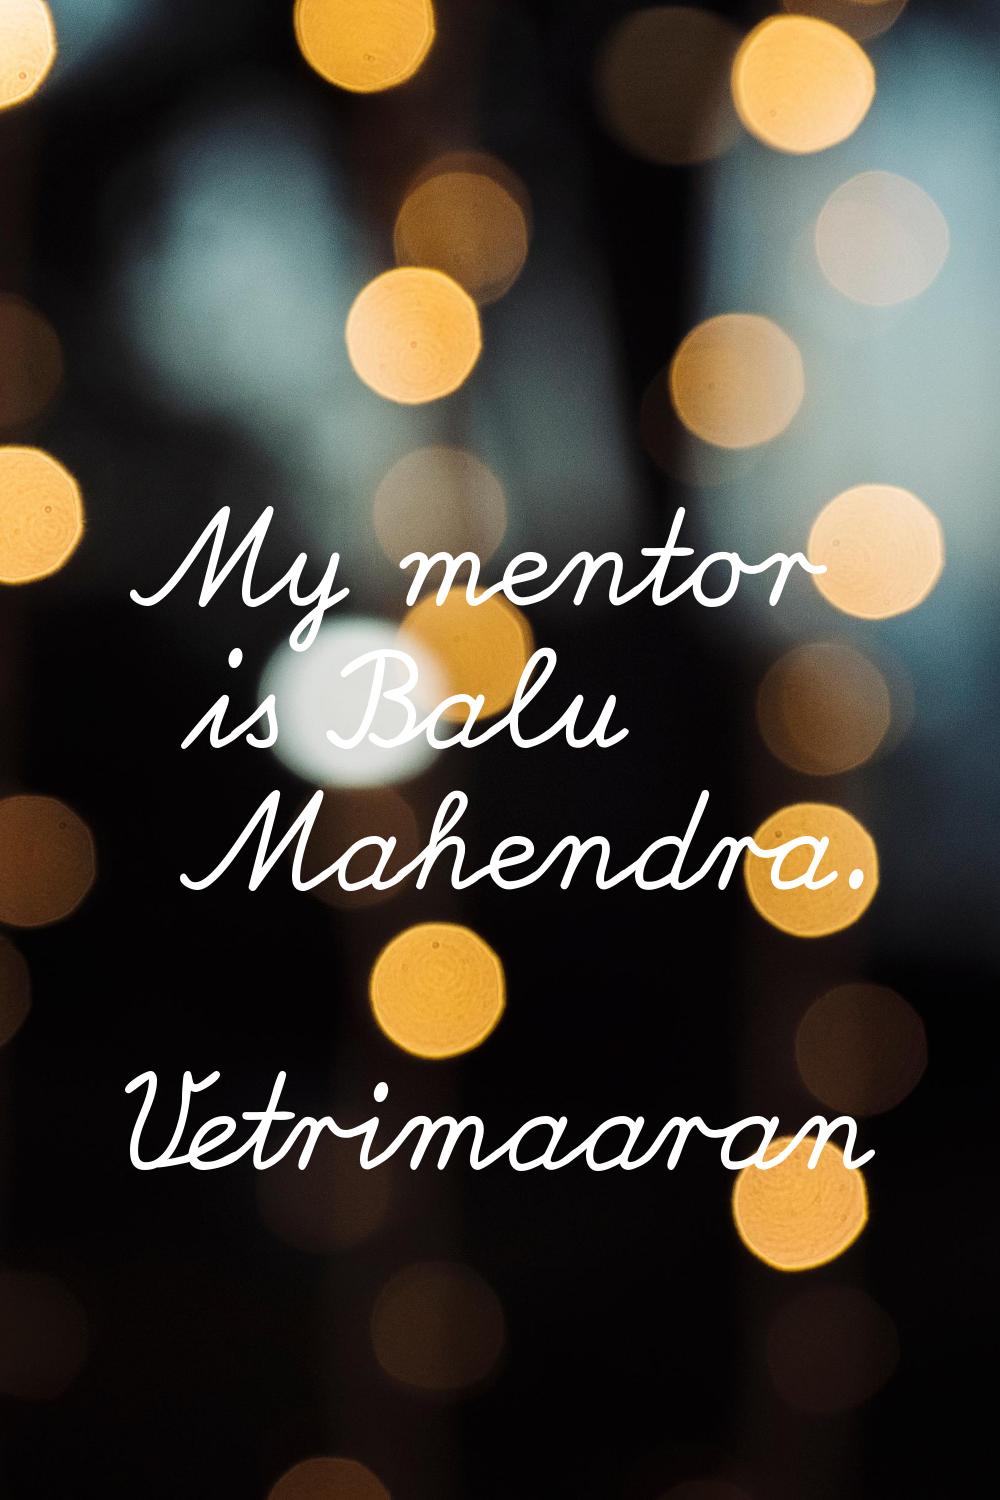 My mentor is Balu Mahendra.